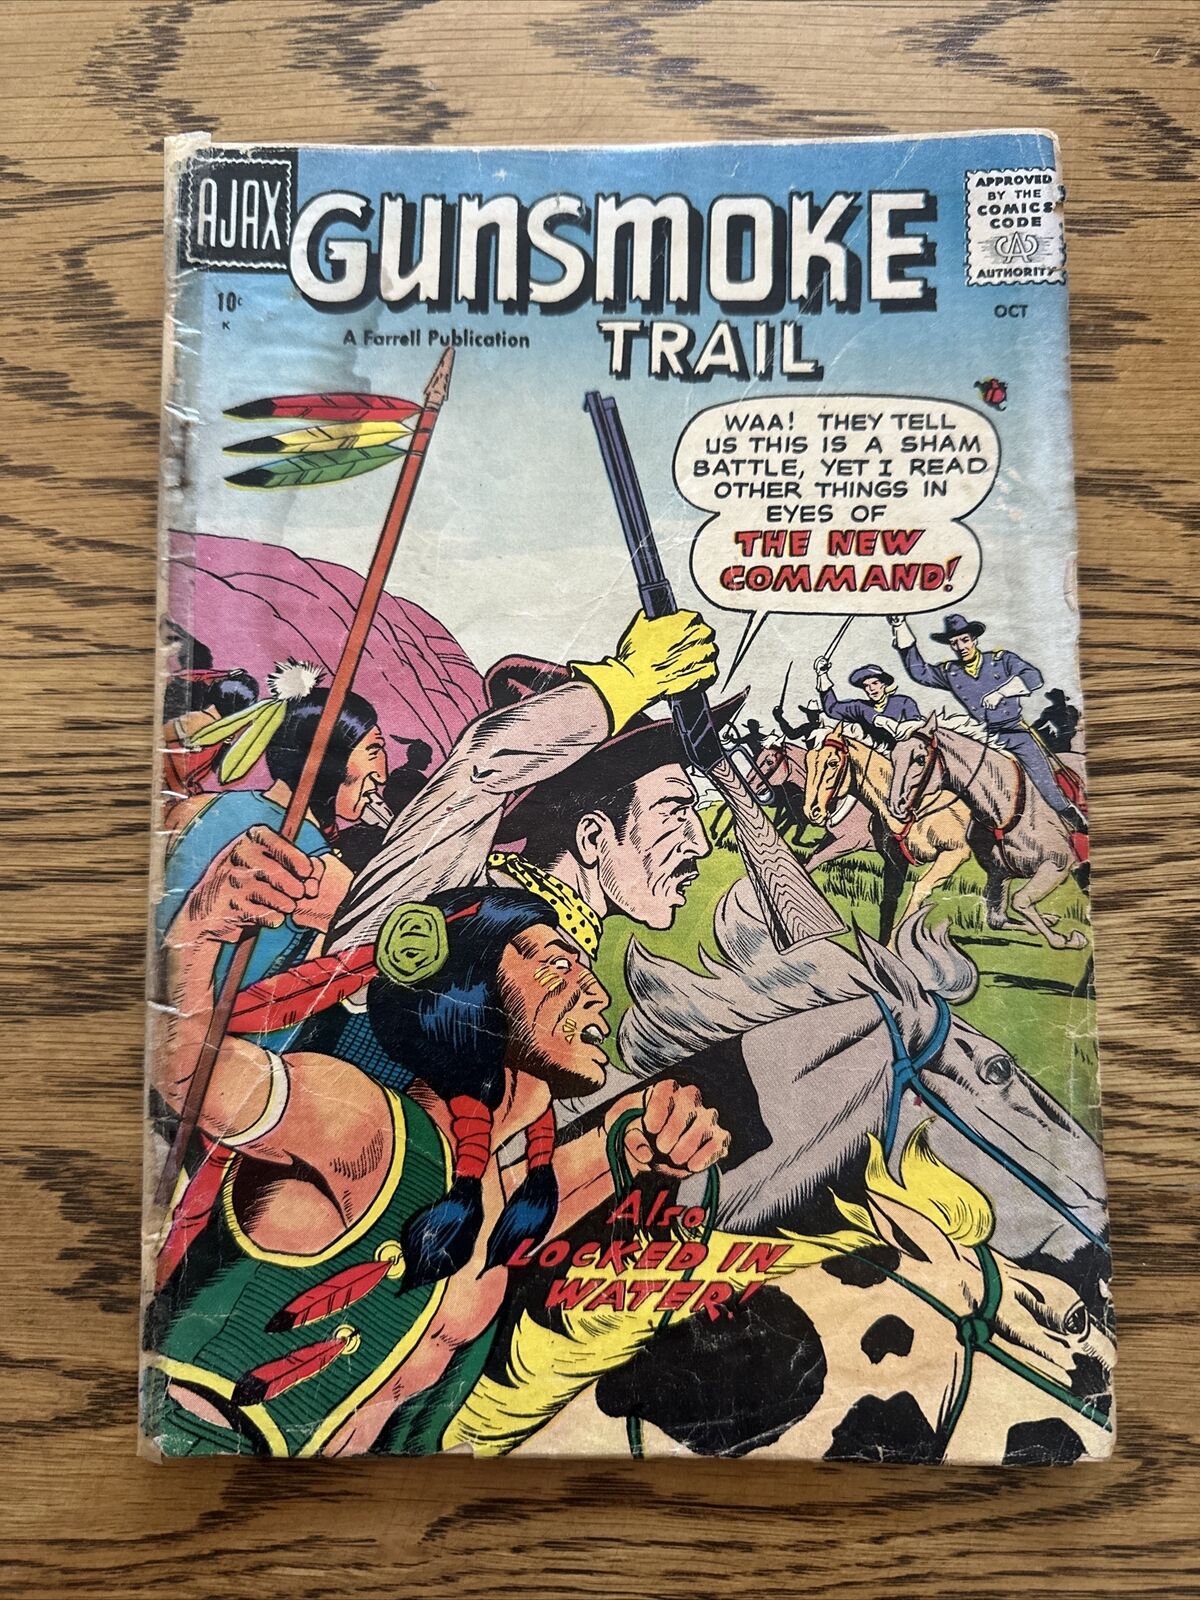 Gunsmoke Trail #3 (Ajax Comics 1957) The New Command Western Low Grade